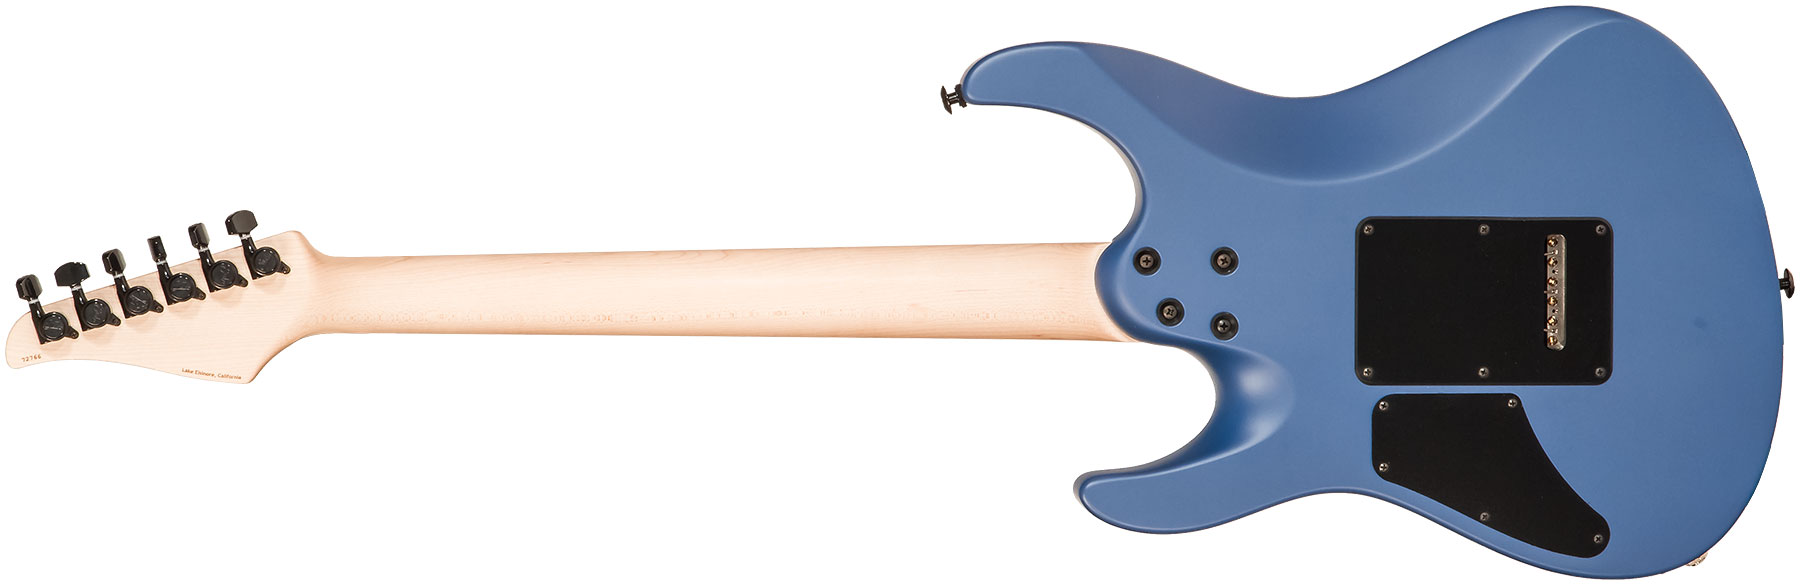 Suhr Modern Terra Ltd 01-ltd-0014 Hsh Trem Eb #72766 - Deep Sea Blue Satin - Str shape electric guitar - Variation 1